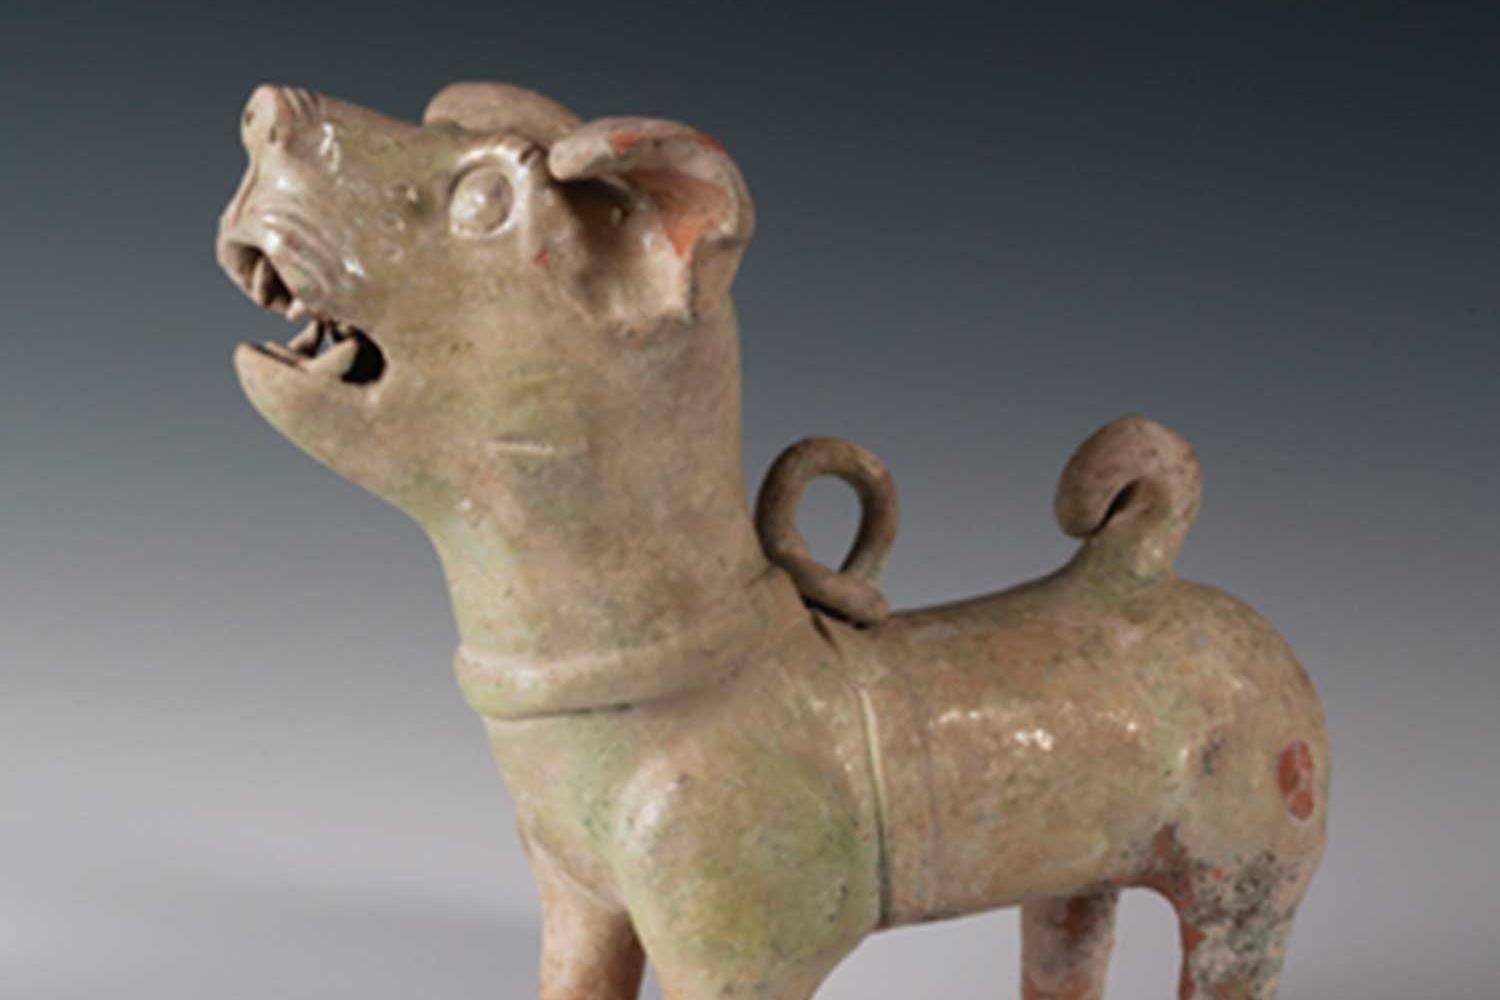 Ceramic figure of small dog